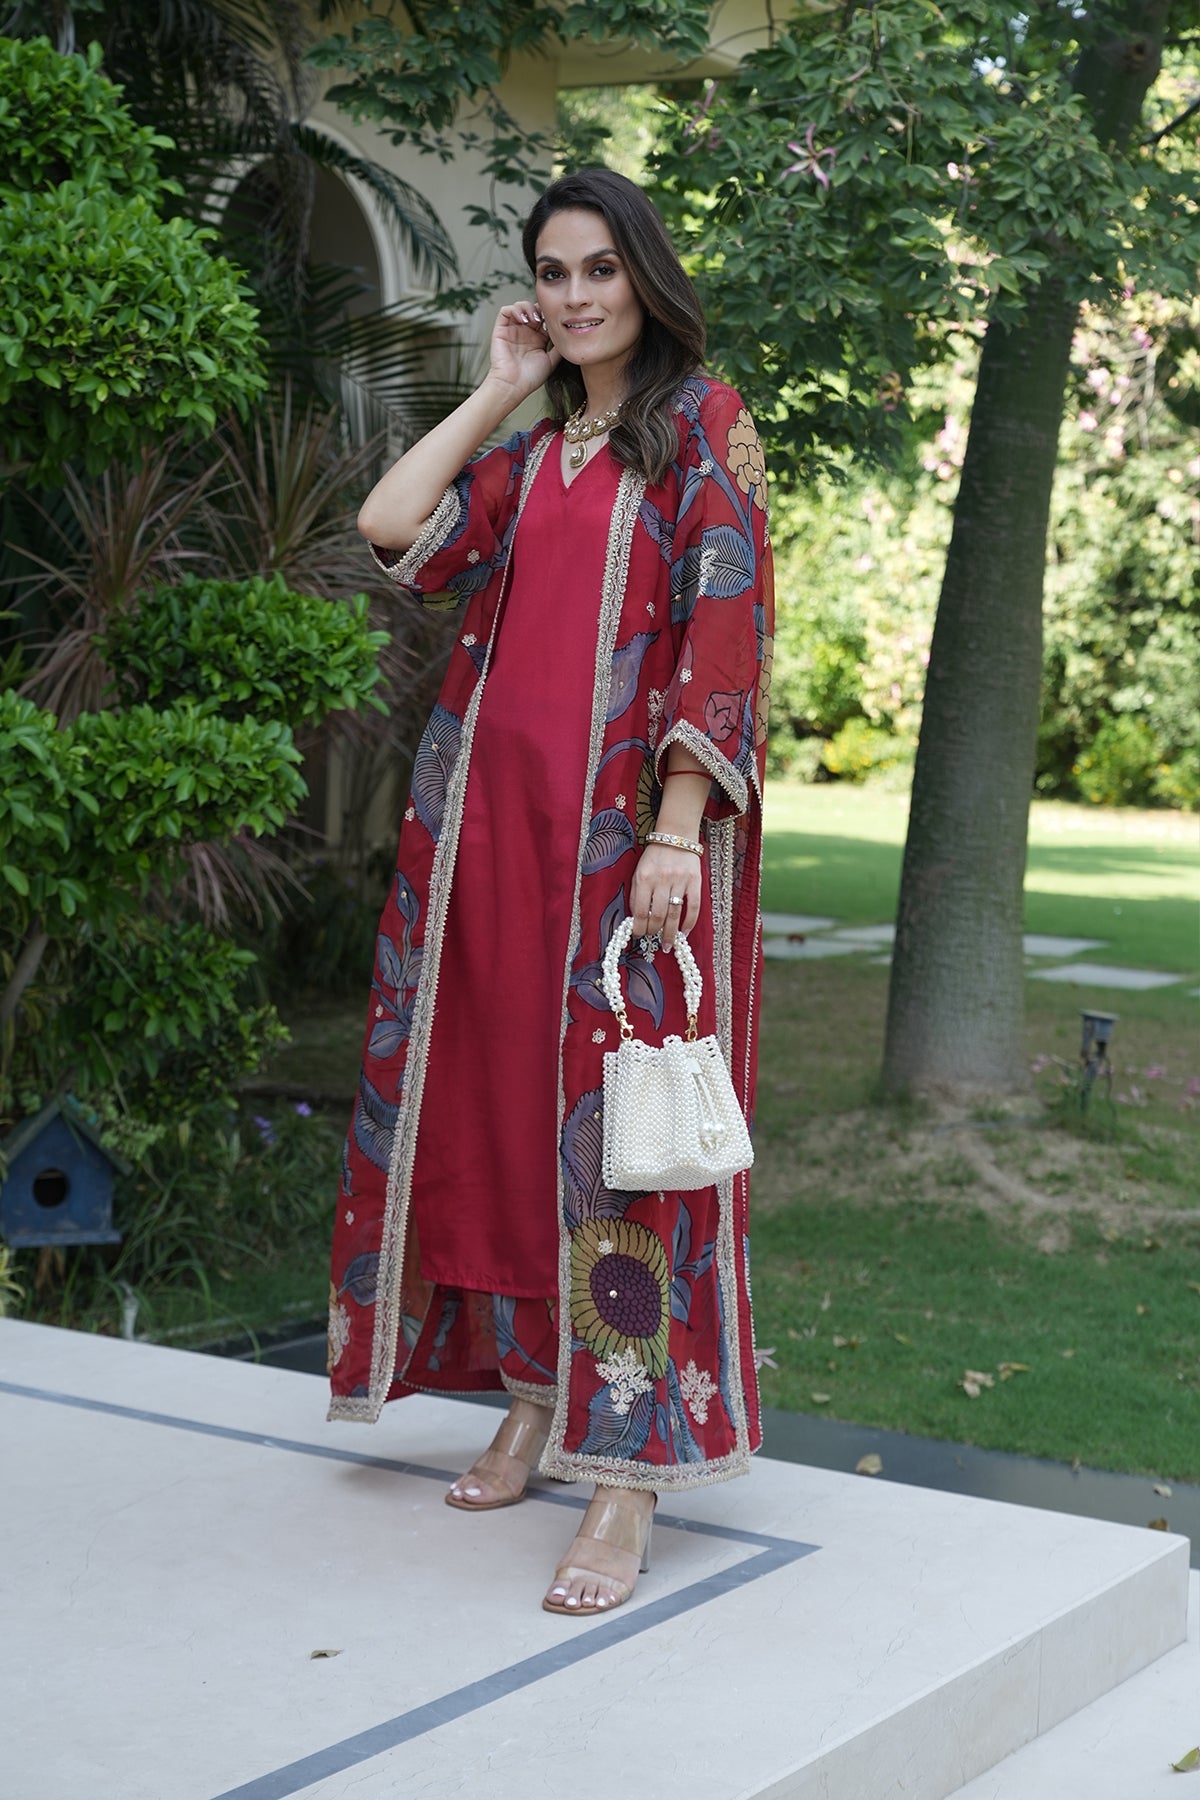 Anushka with the Jaipur Pearl Beaded Potli Bag